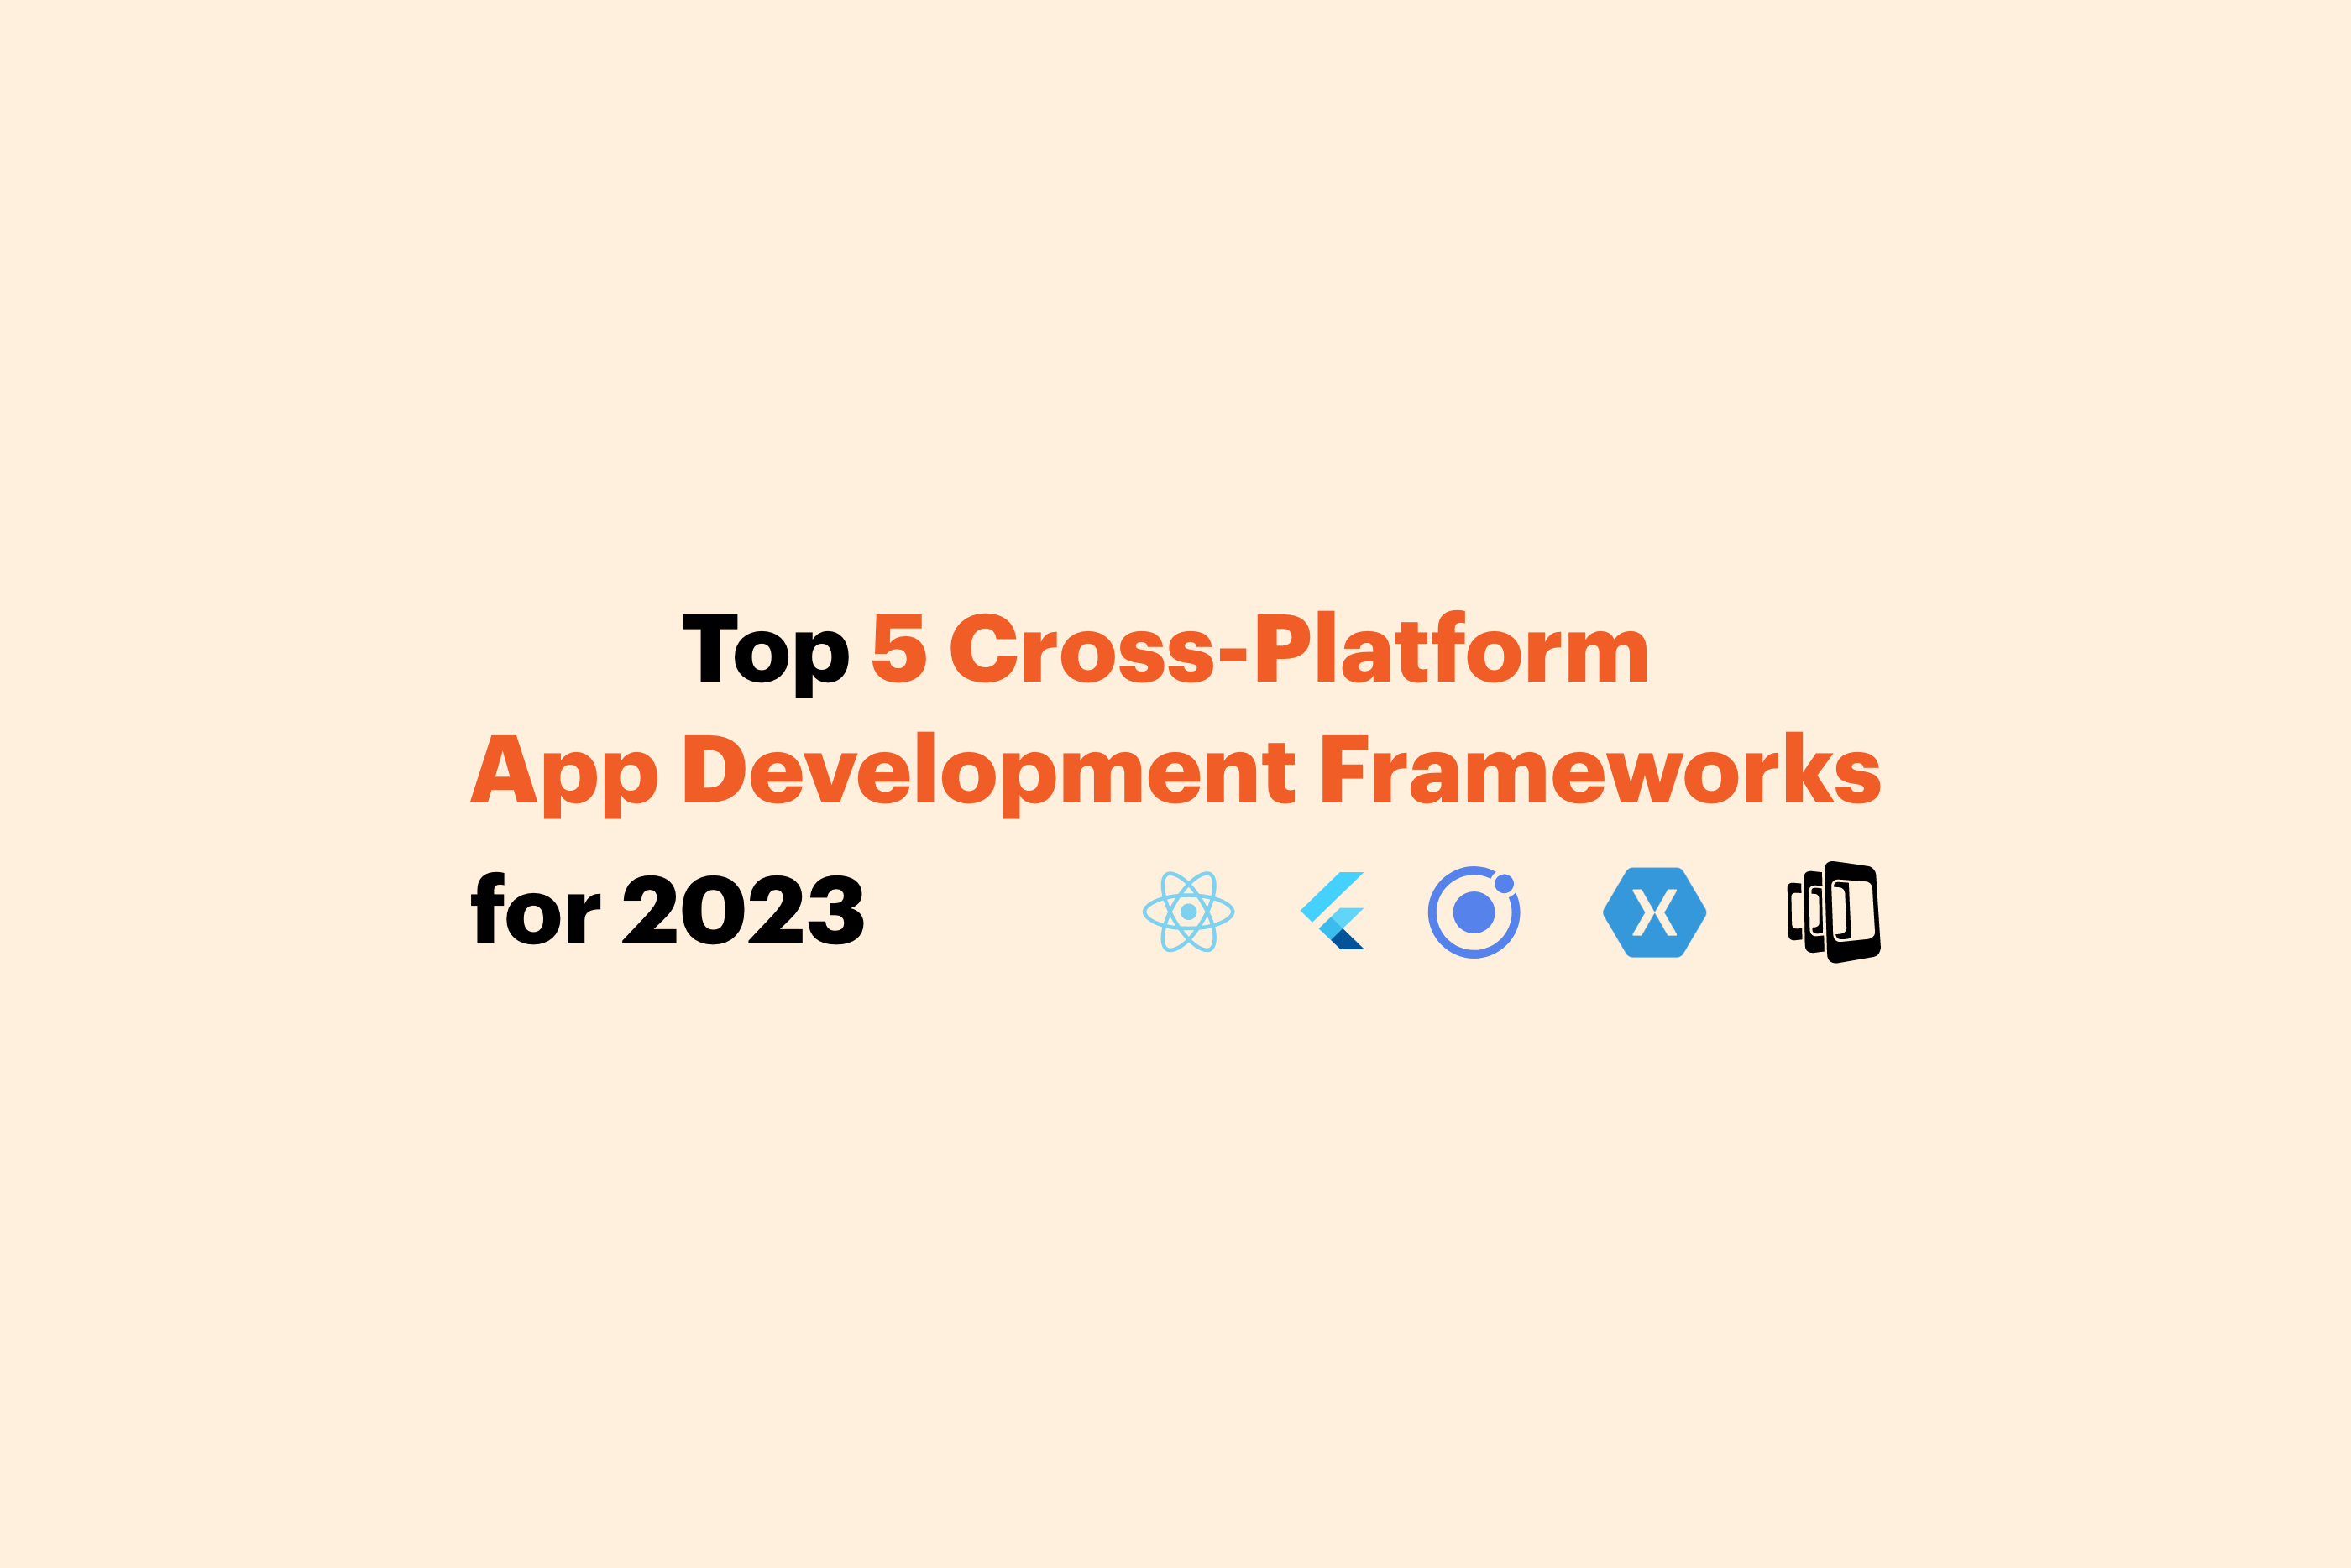 Top 5 Cross-Platform App Development Frameworks for 2023